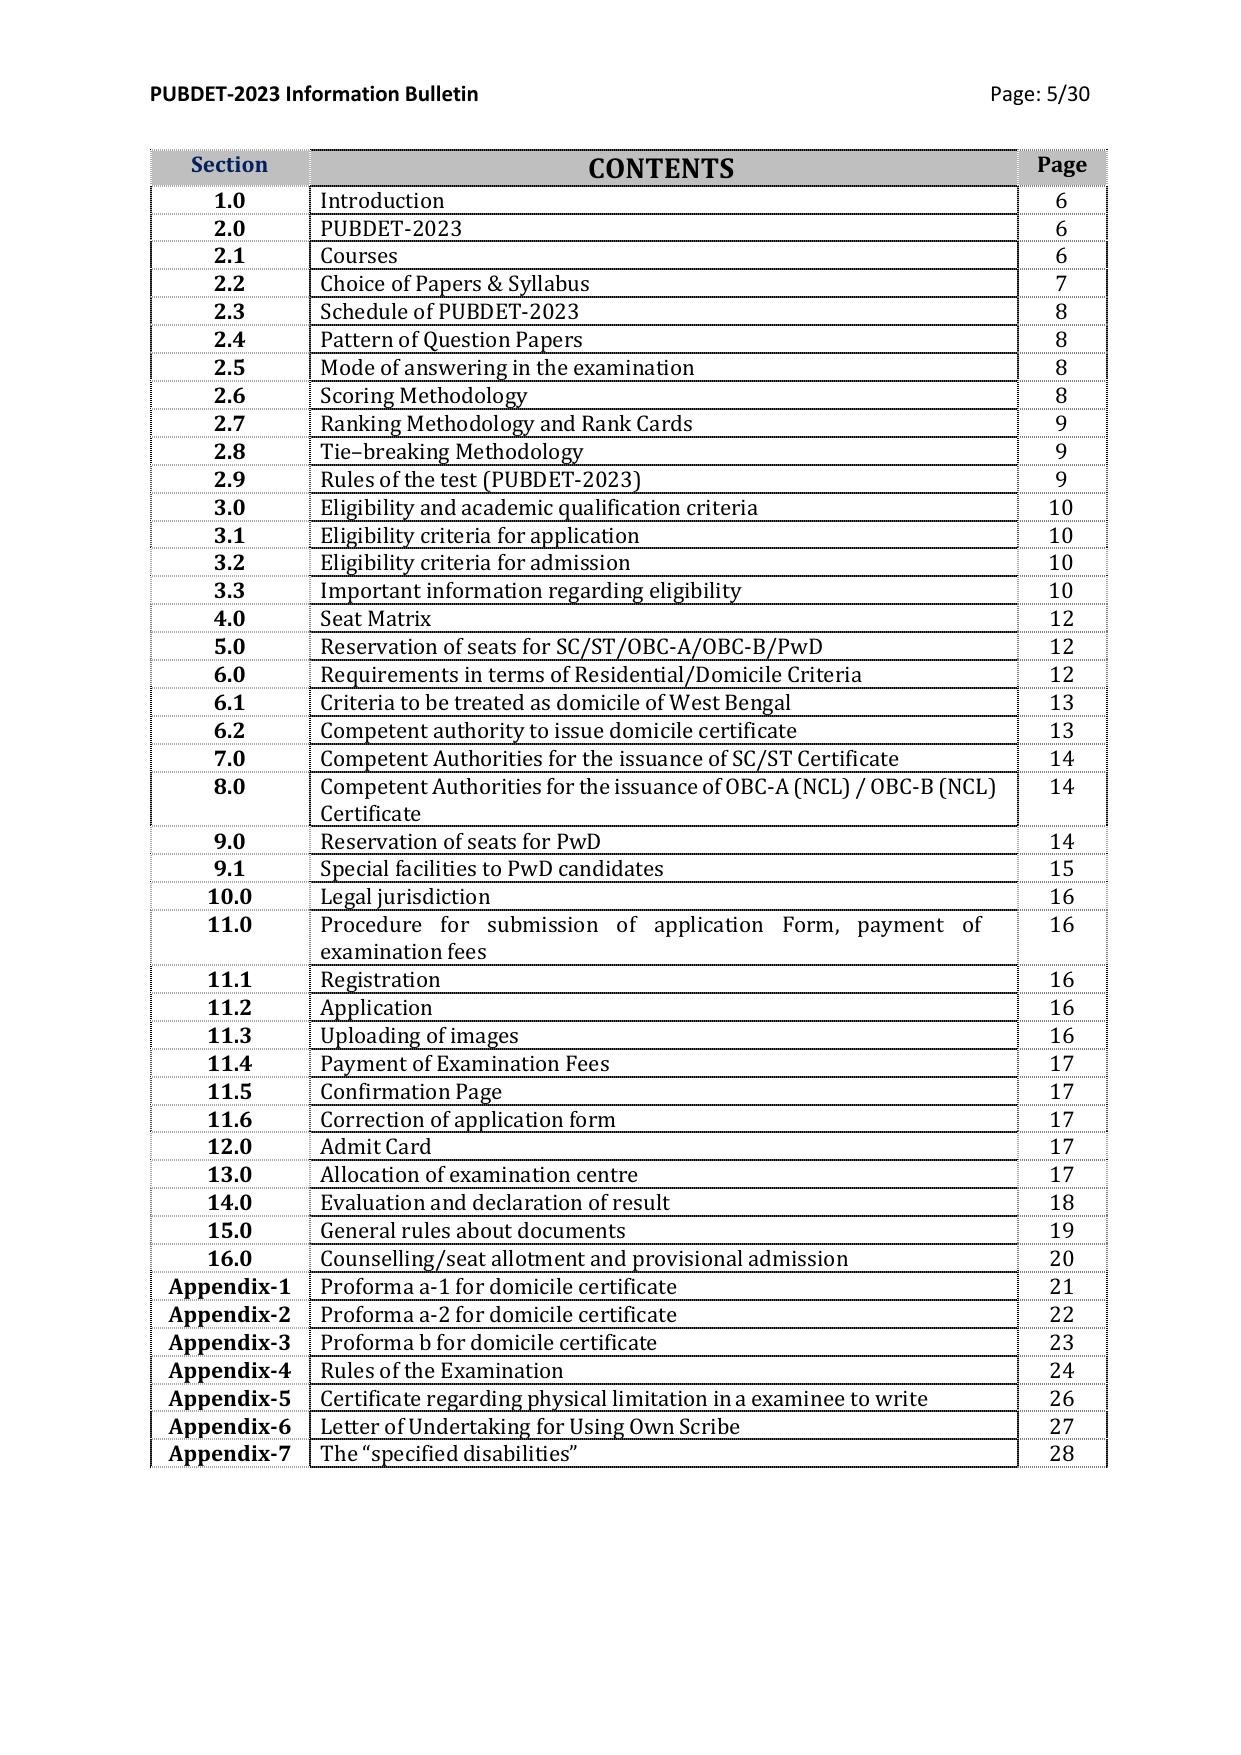 PU BDET Exam - Page 5